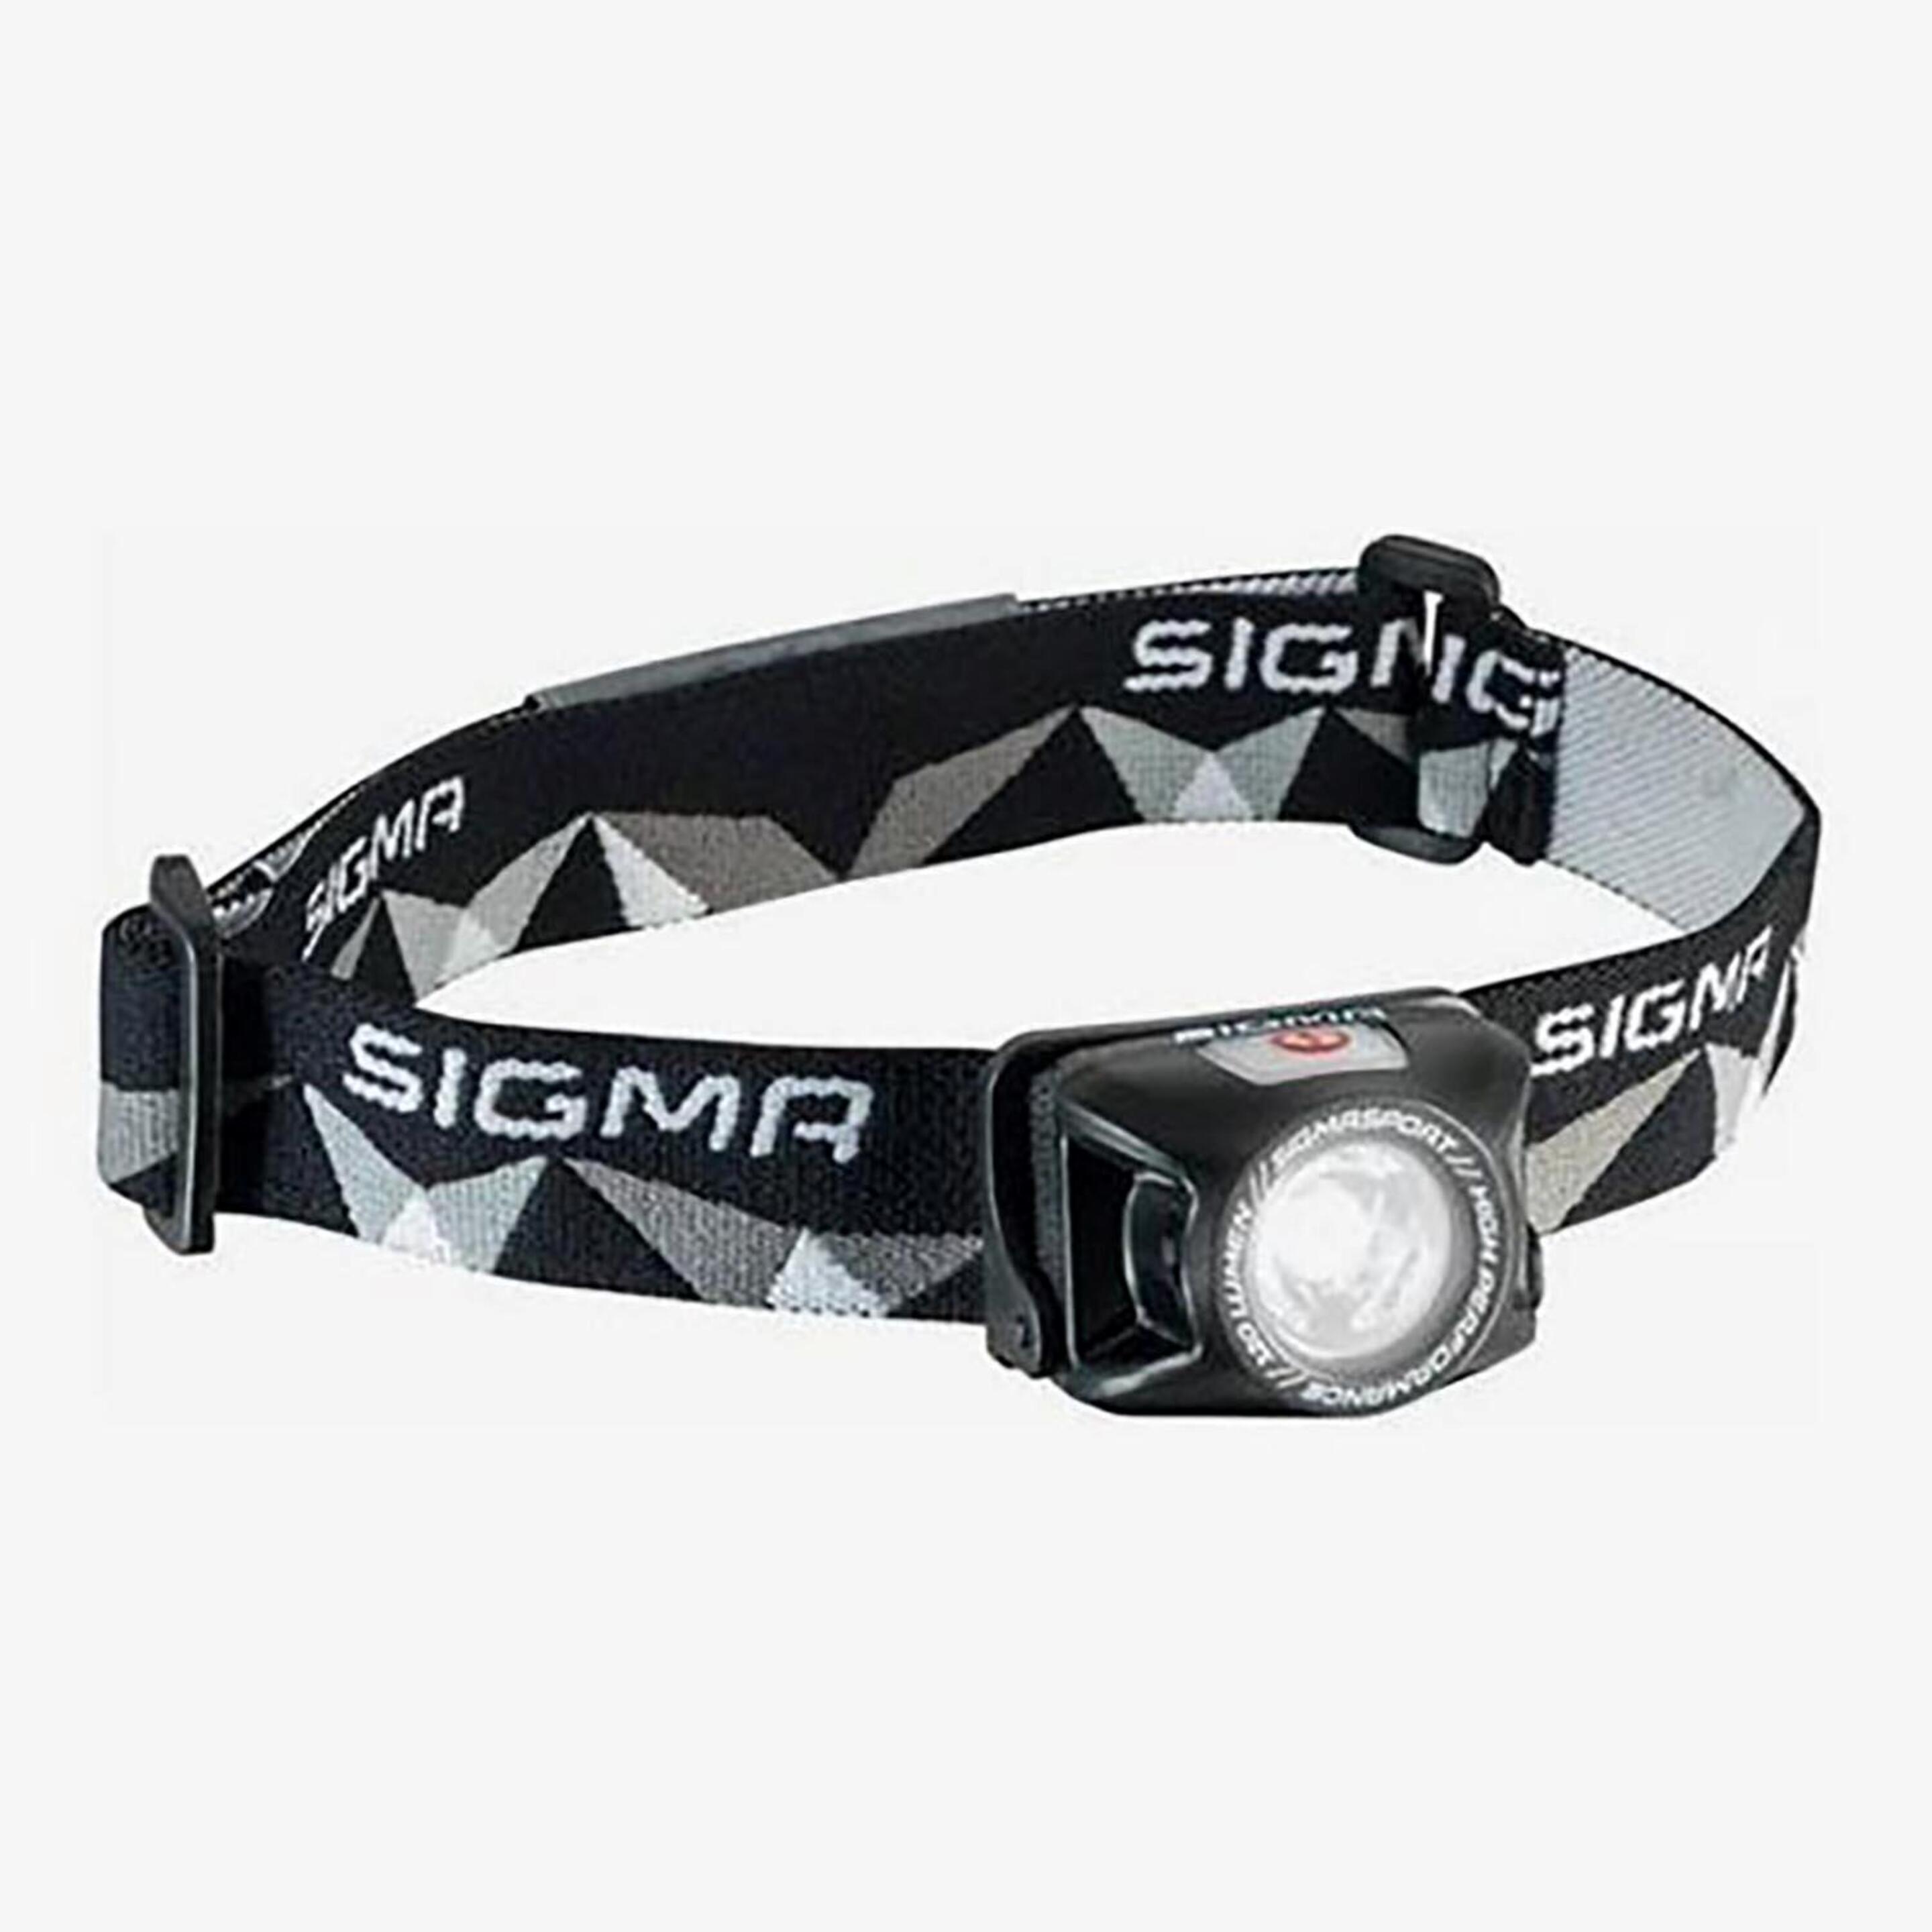 Sigma Id Tri - Preto - Lanterna Frontal | Sport Zone MKP